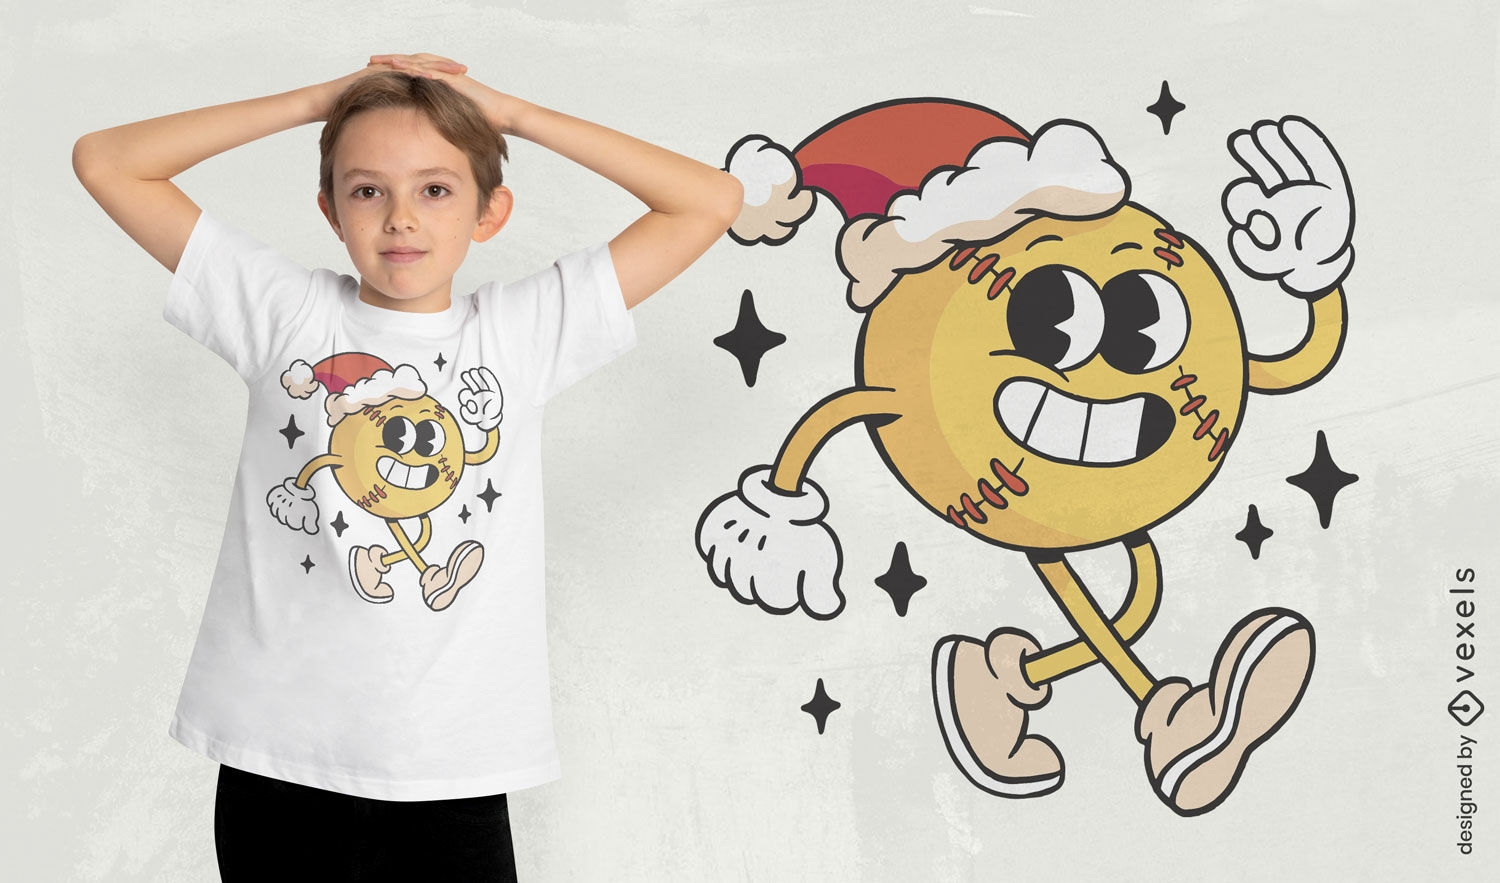 Fröhliches Weihnachts-Softball-Ballon-T-Shirt-Design